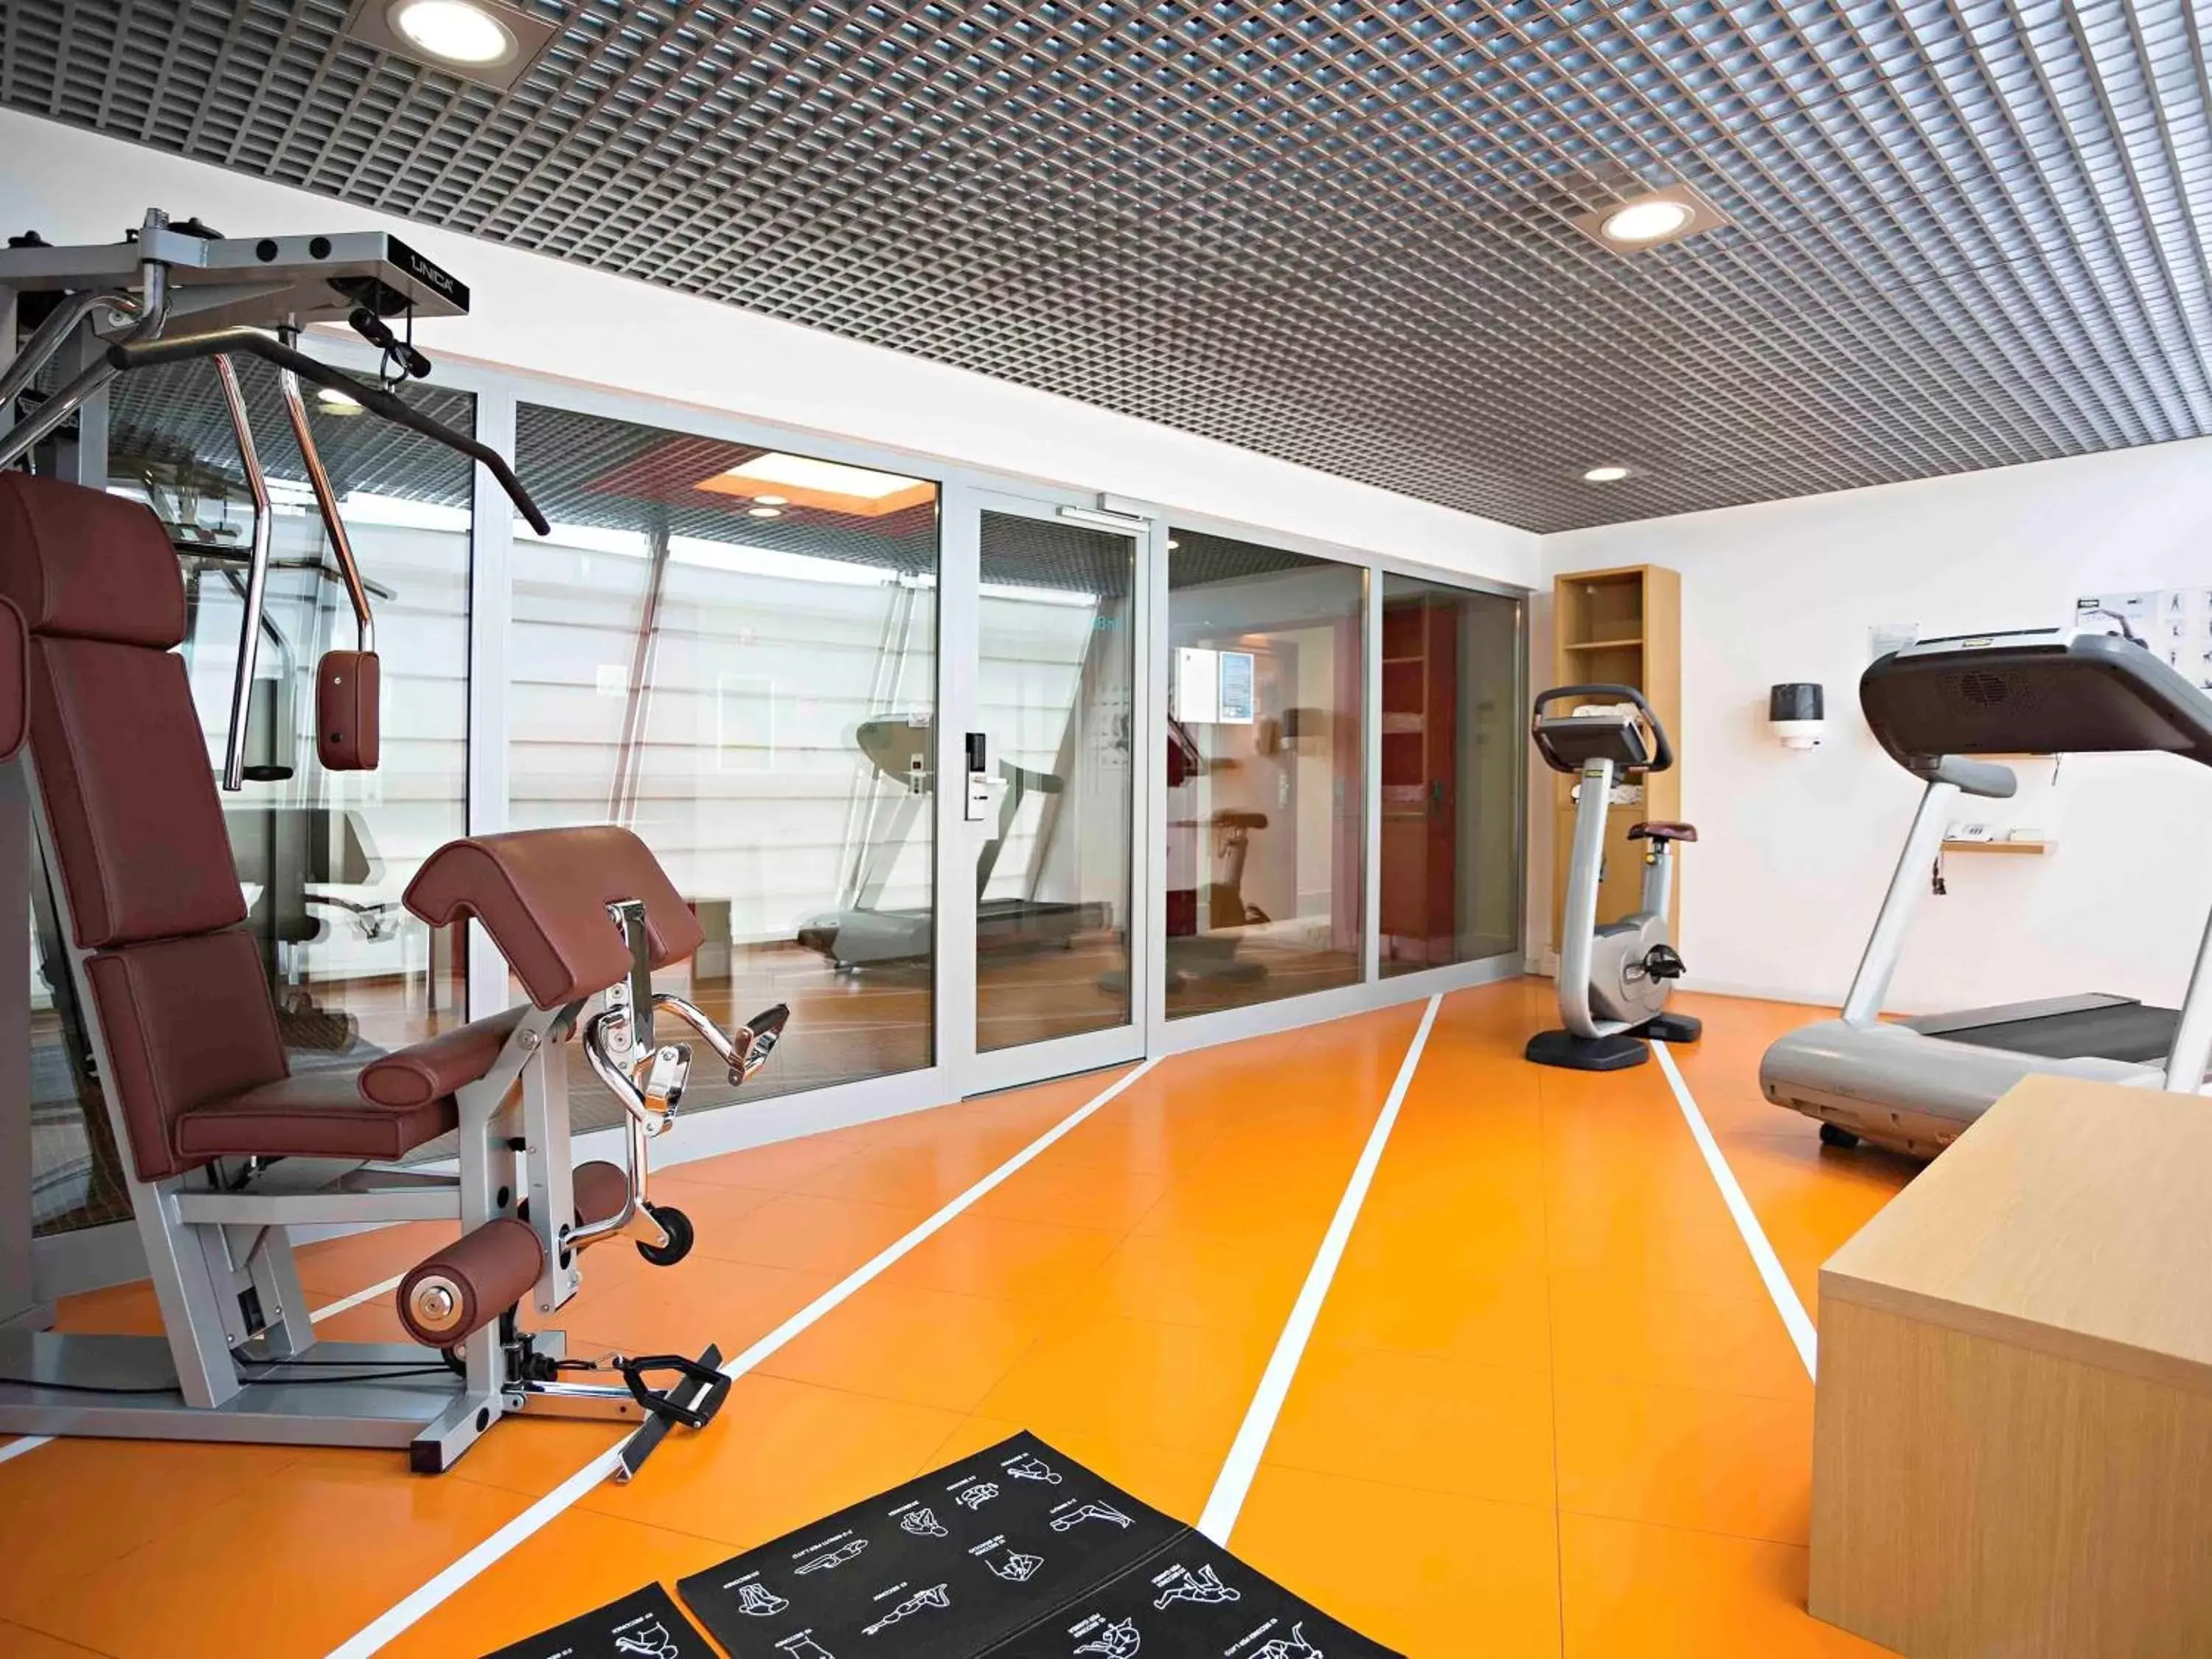 Fitness centre/facilities, Fitness Center/Facilities in Novotel Caserta Sud